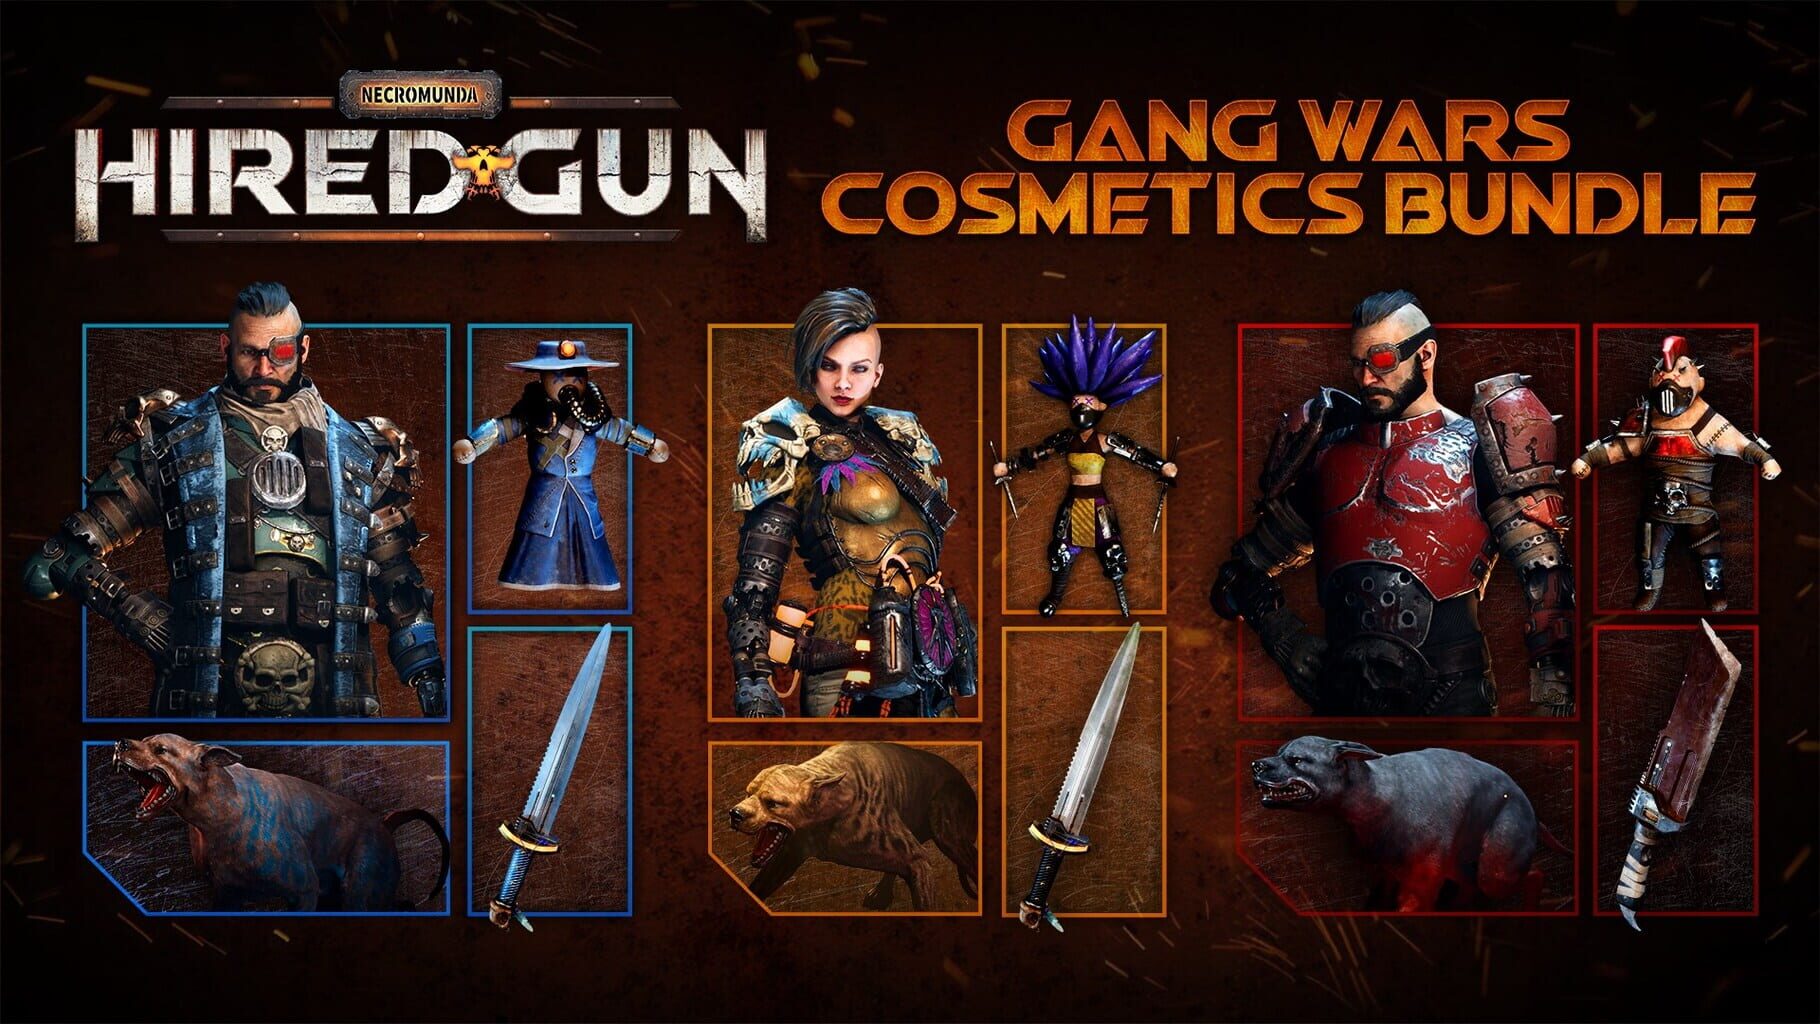 Arte - Necromunda: Hired Gun - Gang Wars Cosmetics Bundle